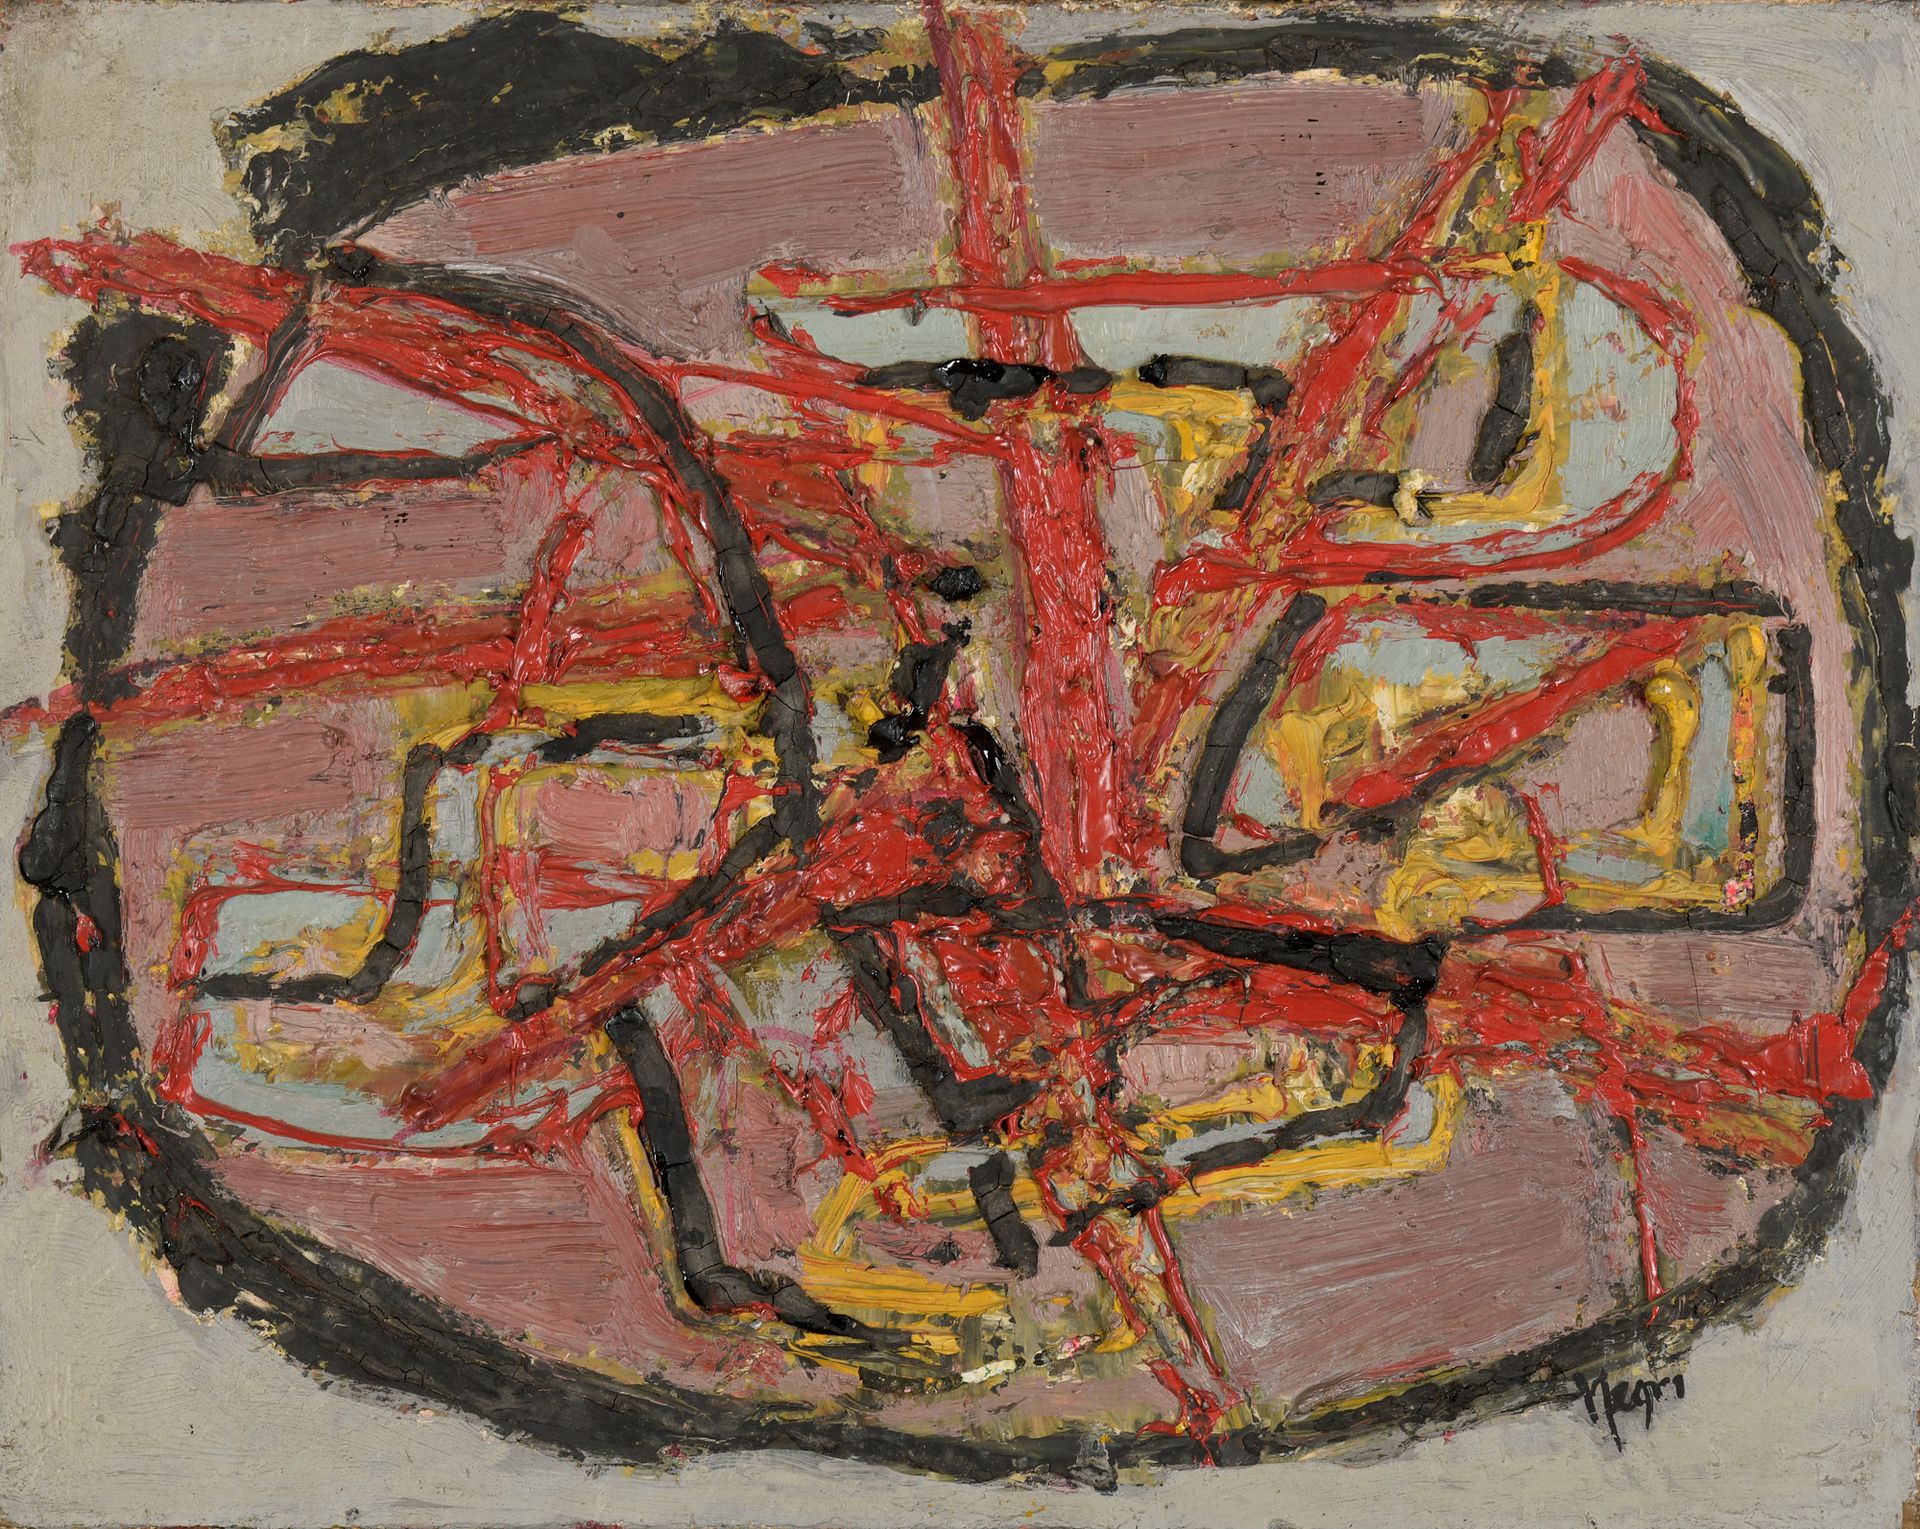 Null 尼娜-内格里(1909-1981)

无题》，1958年

布面油画。

右下方有签名，背面有会签和日期。

35 x 45厘米